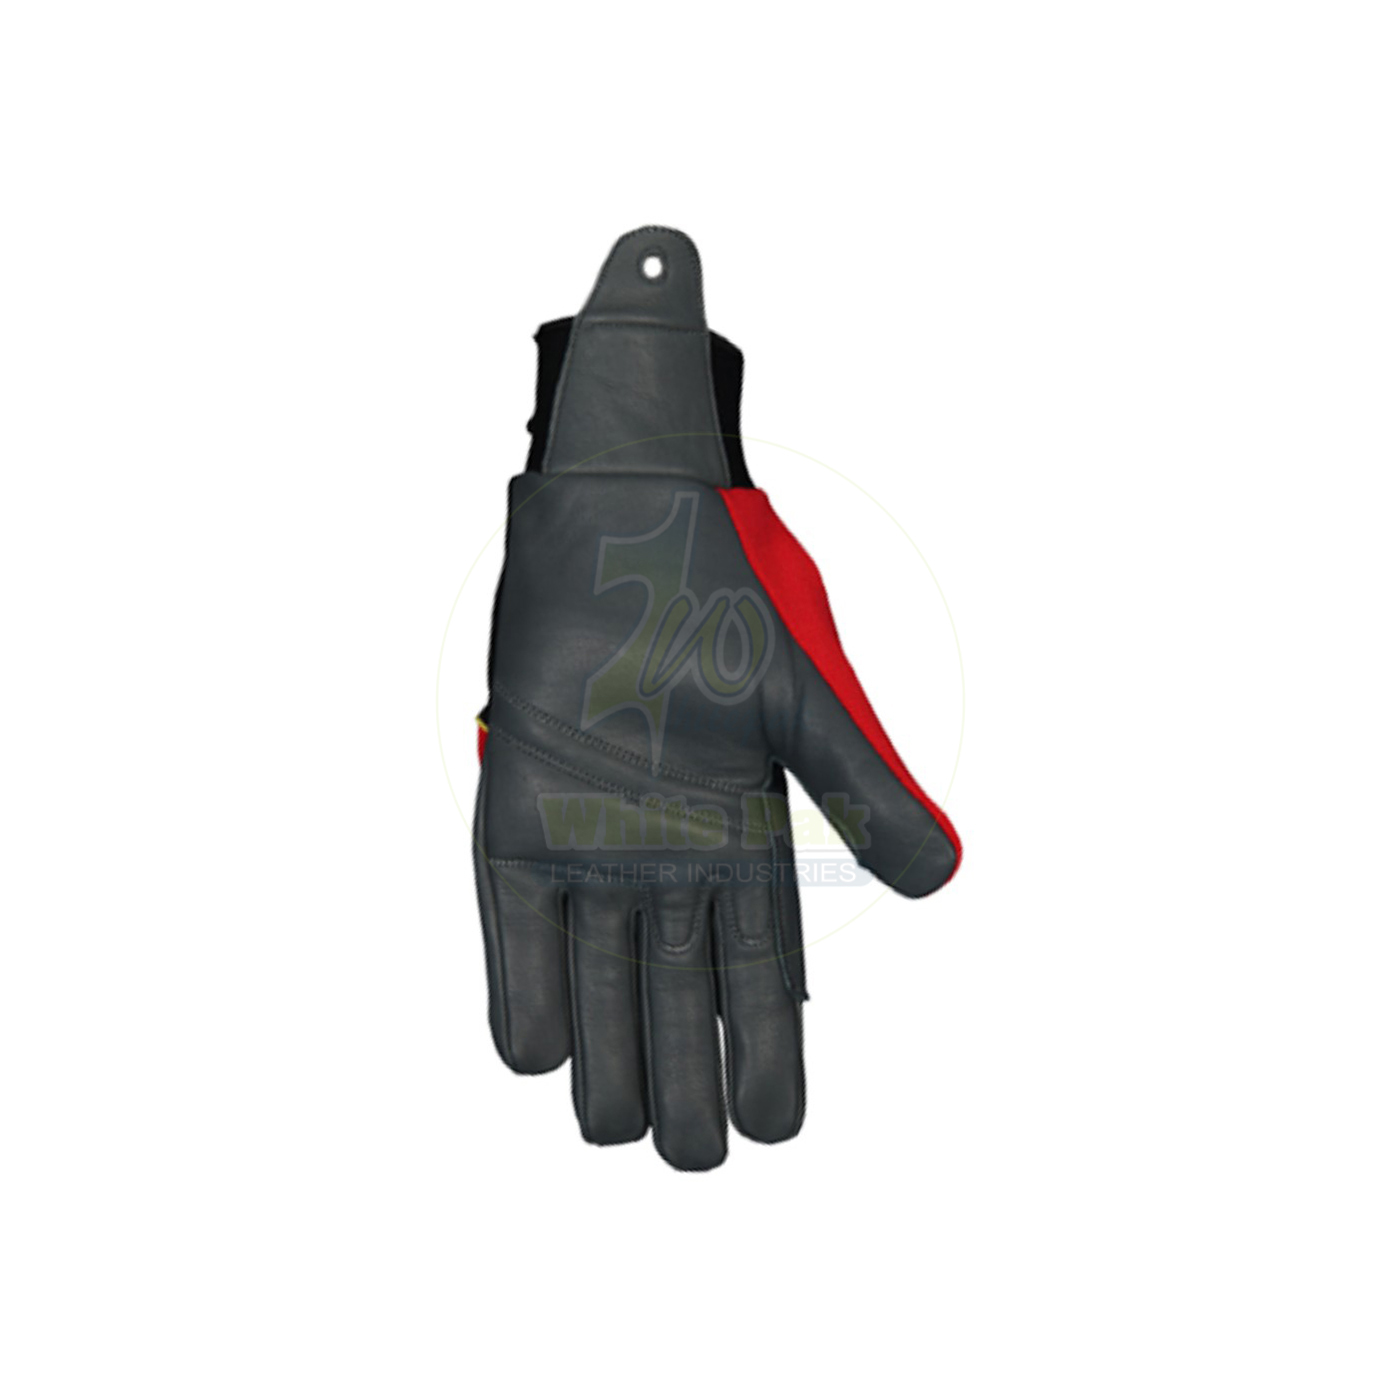 Top Performance Mechanics Gloves